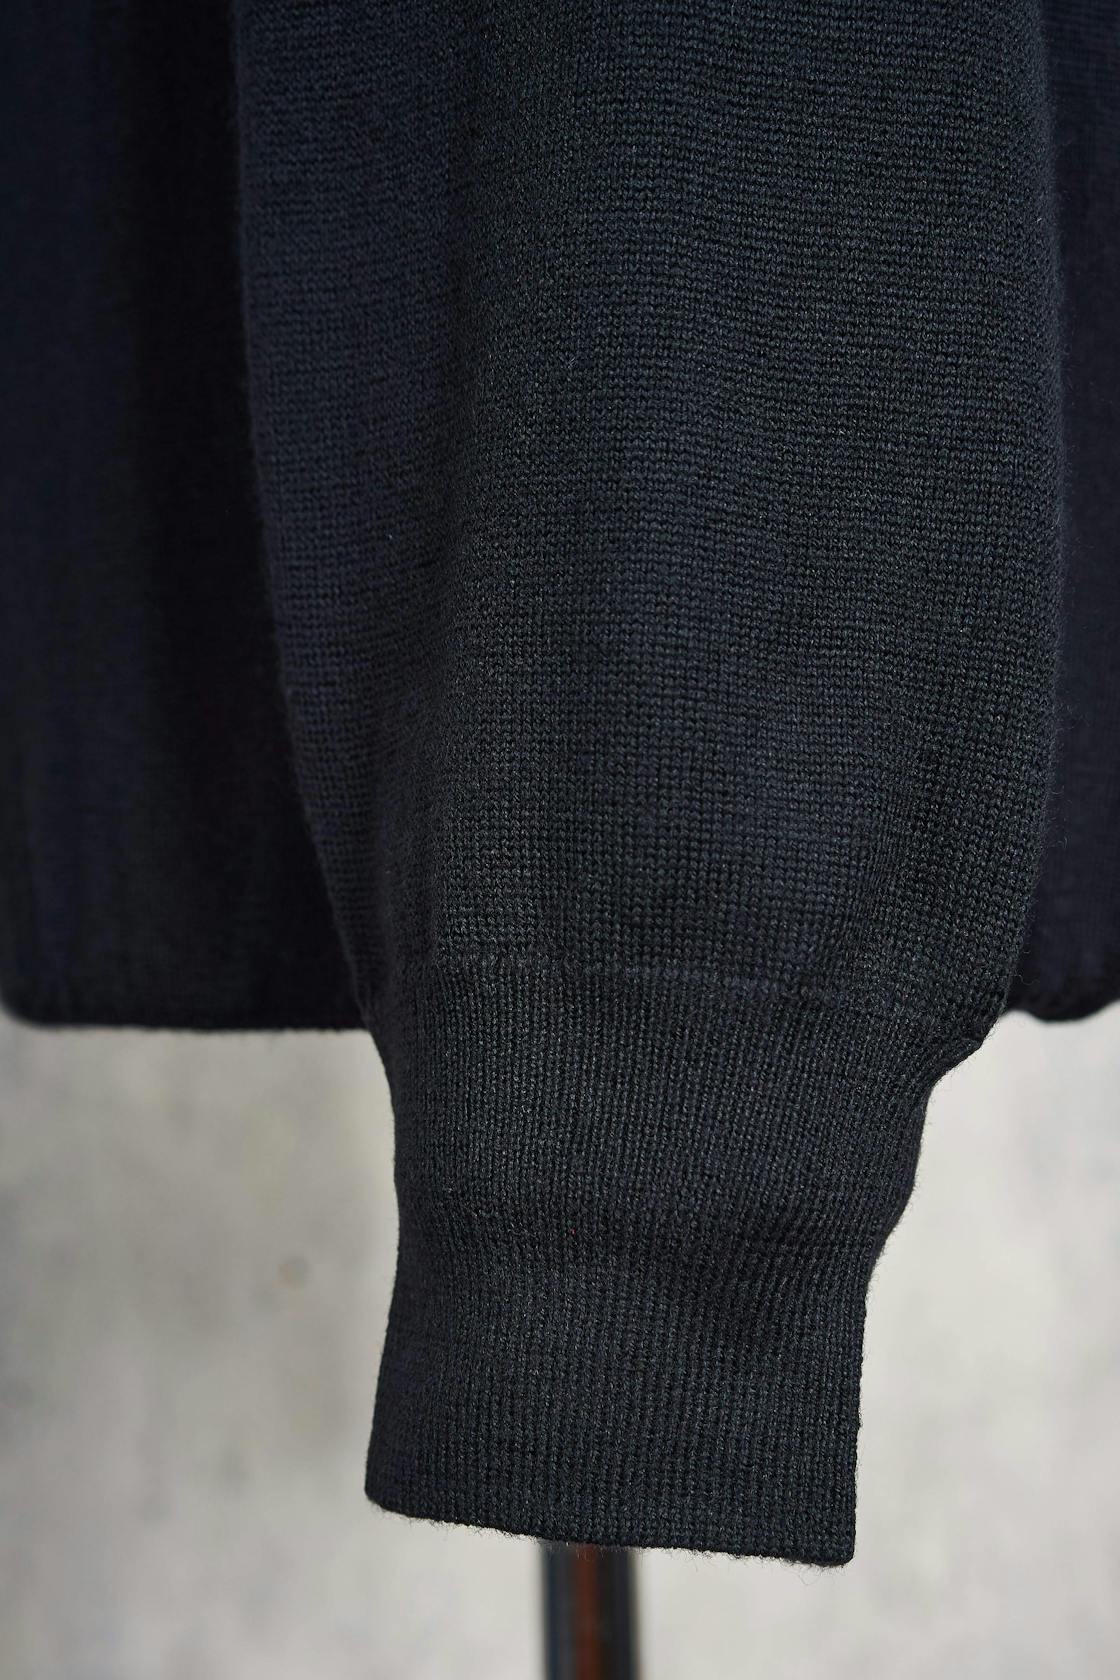 Ascot Chang Black Extra-Fine Merino Wool Round Neck Sweater